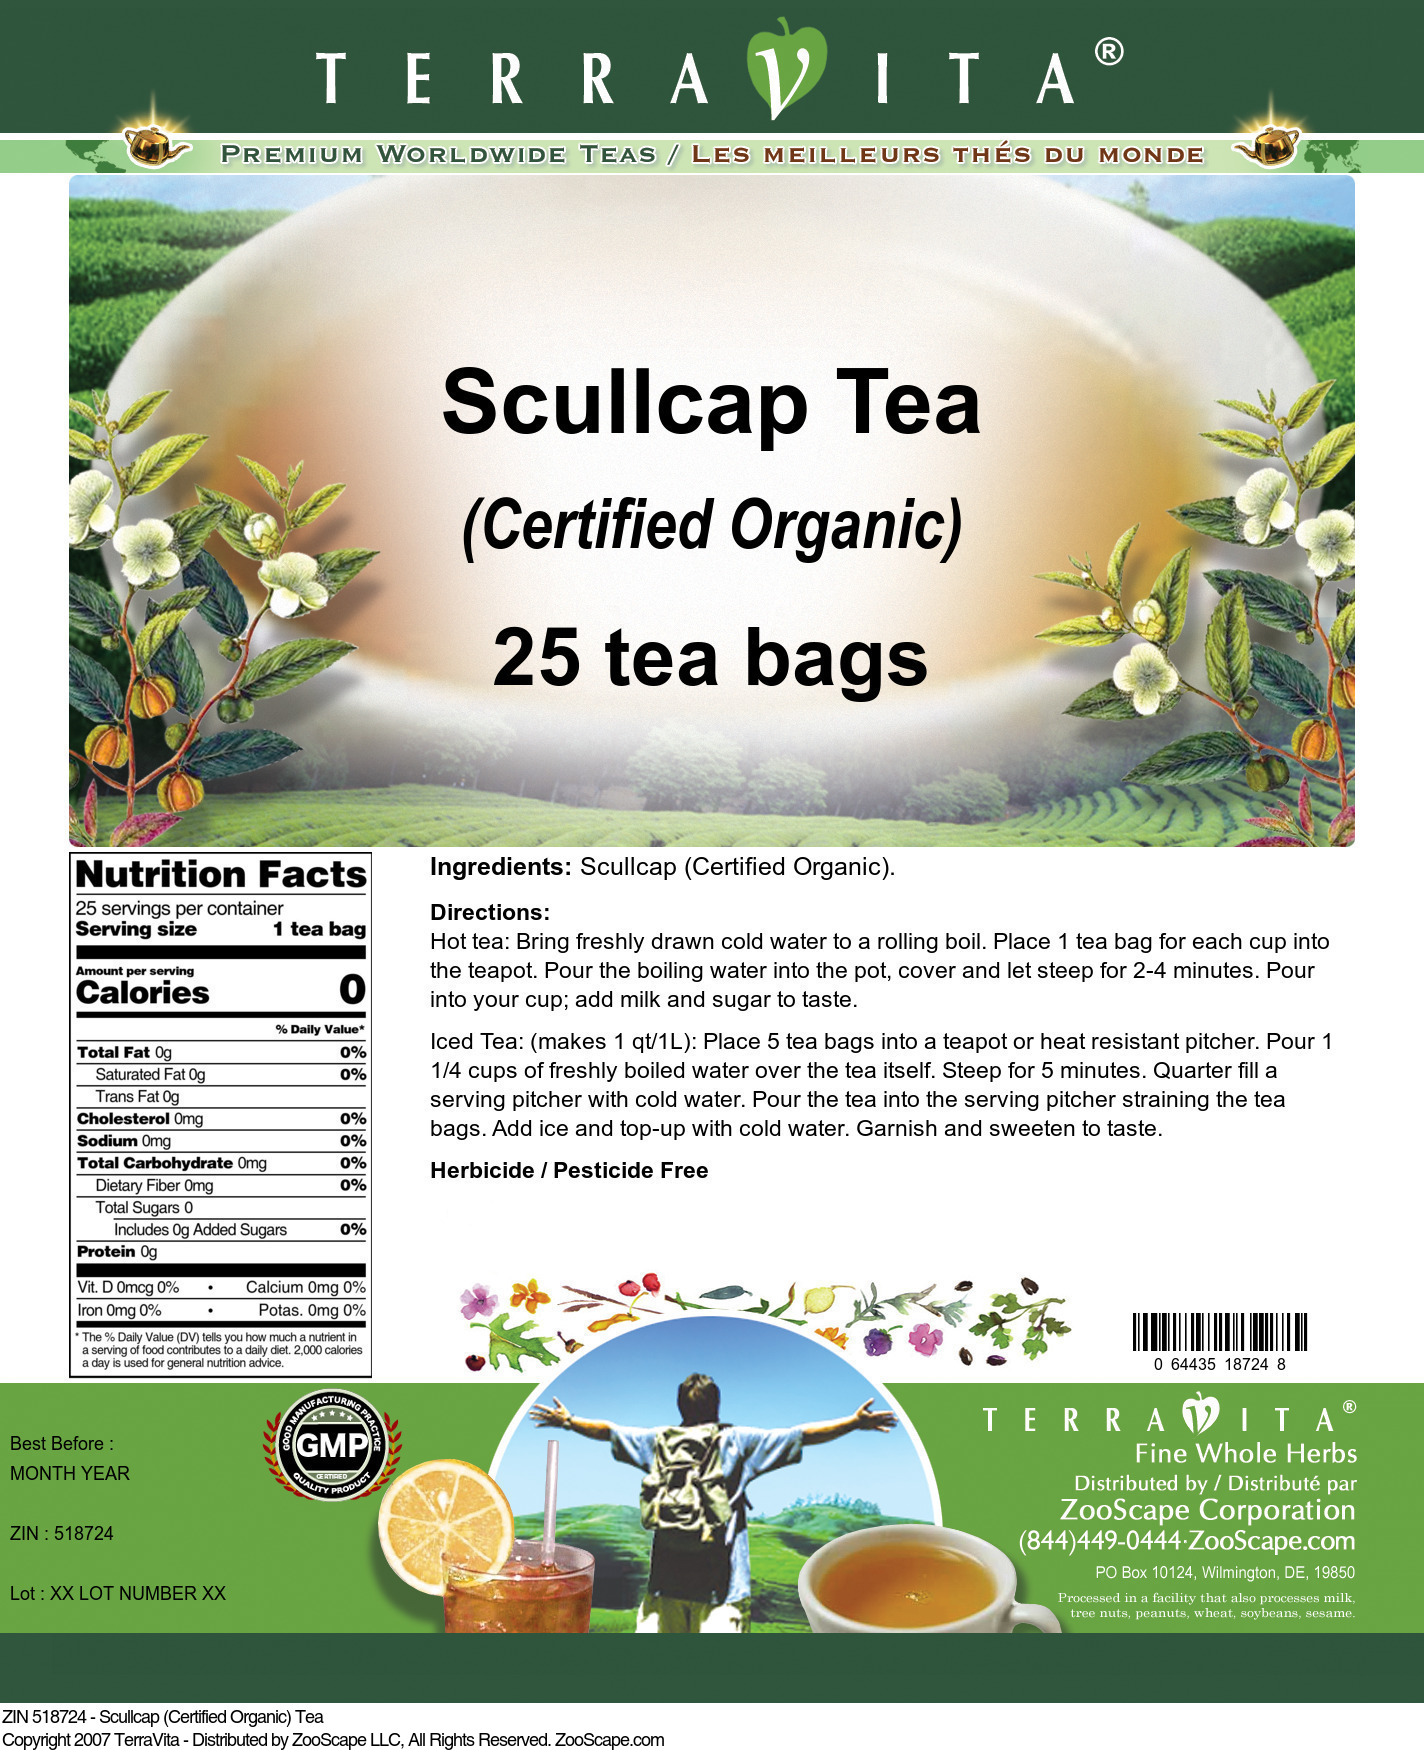 Scullcap (Certified Organic) Tea - Label